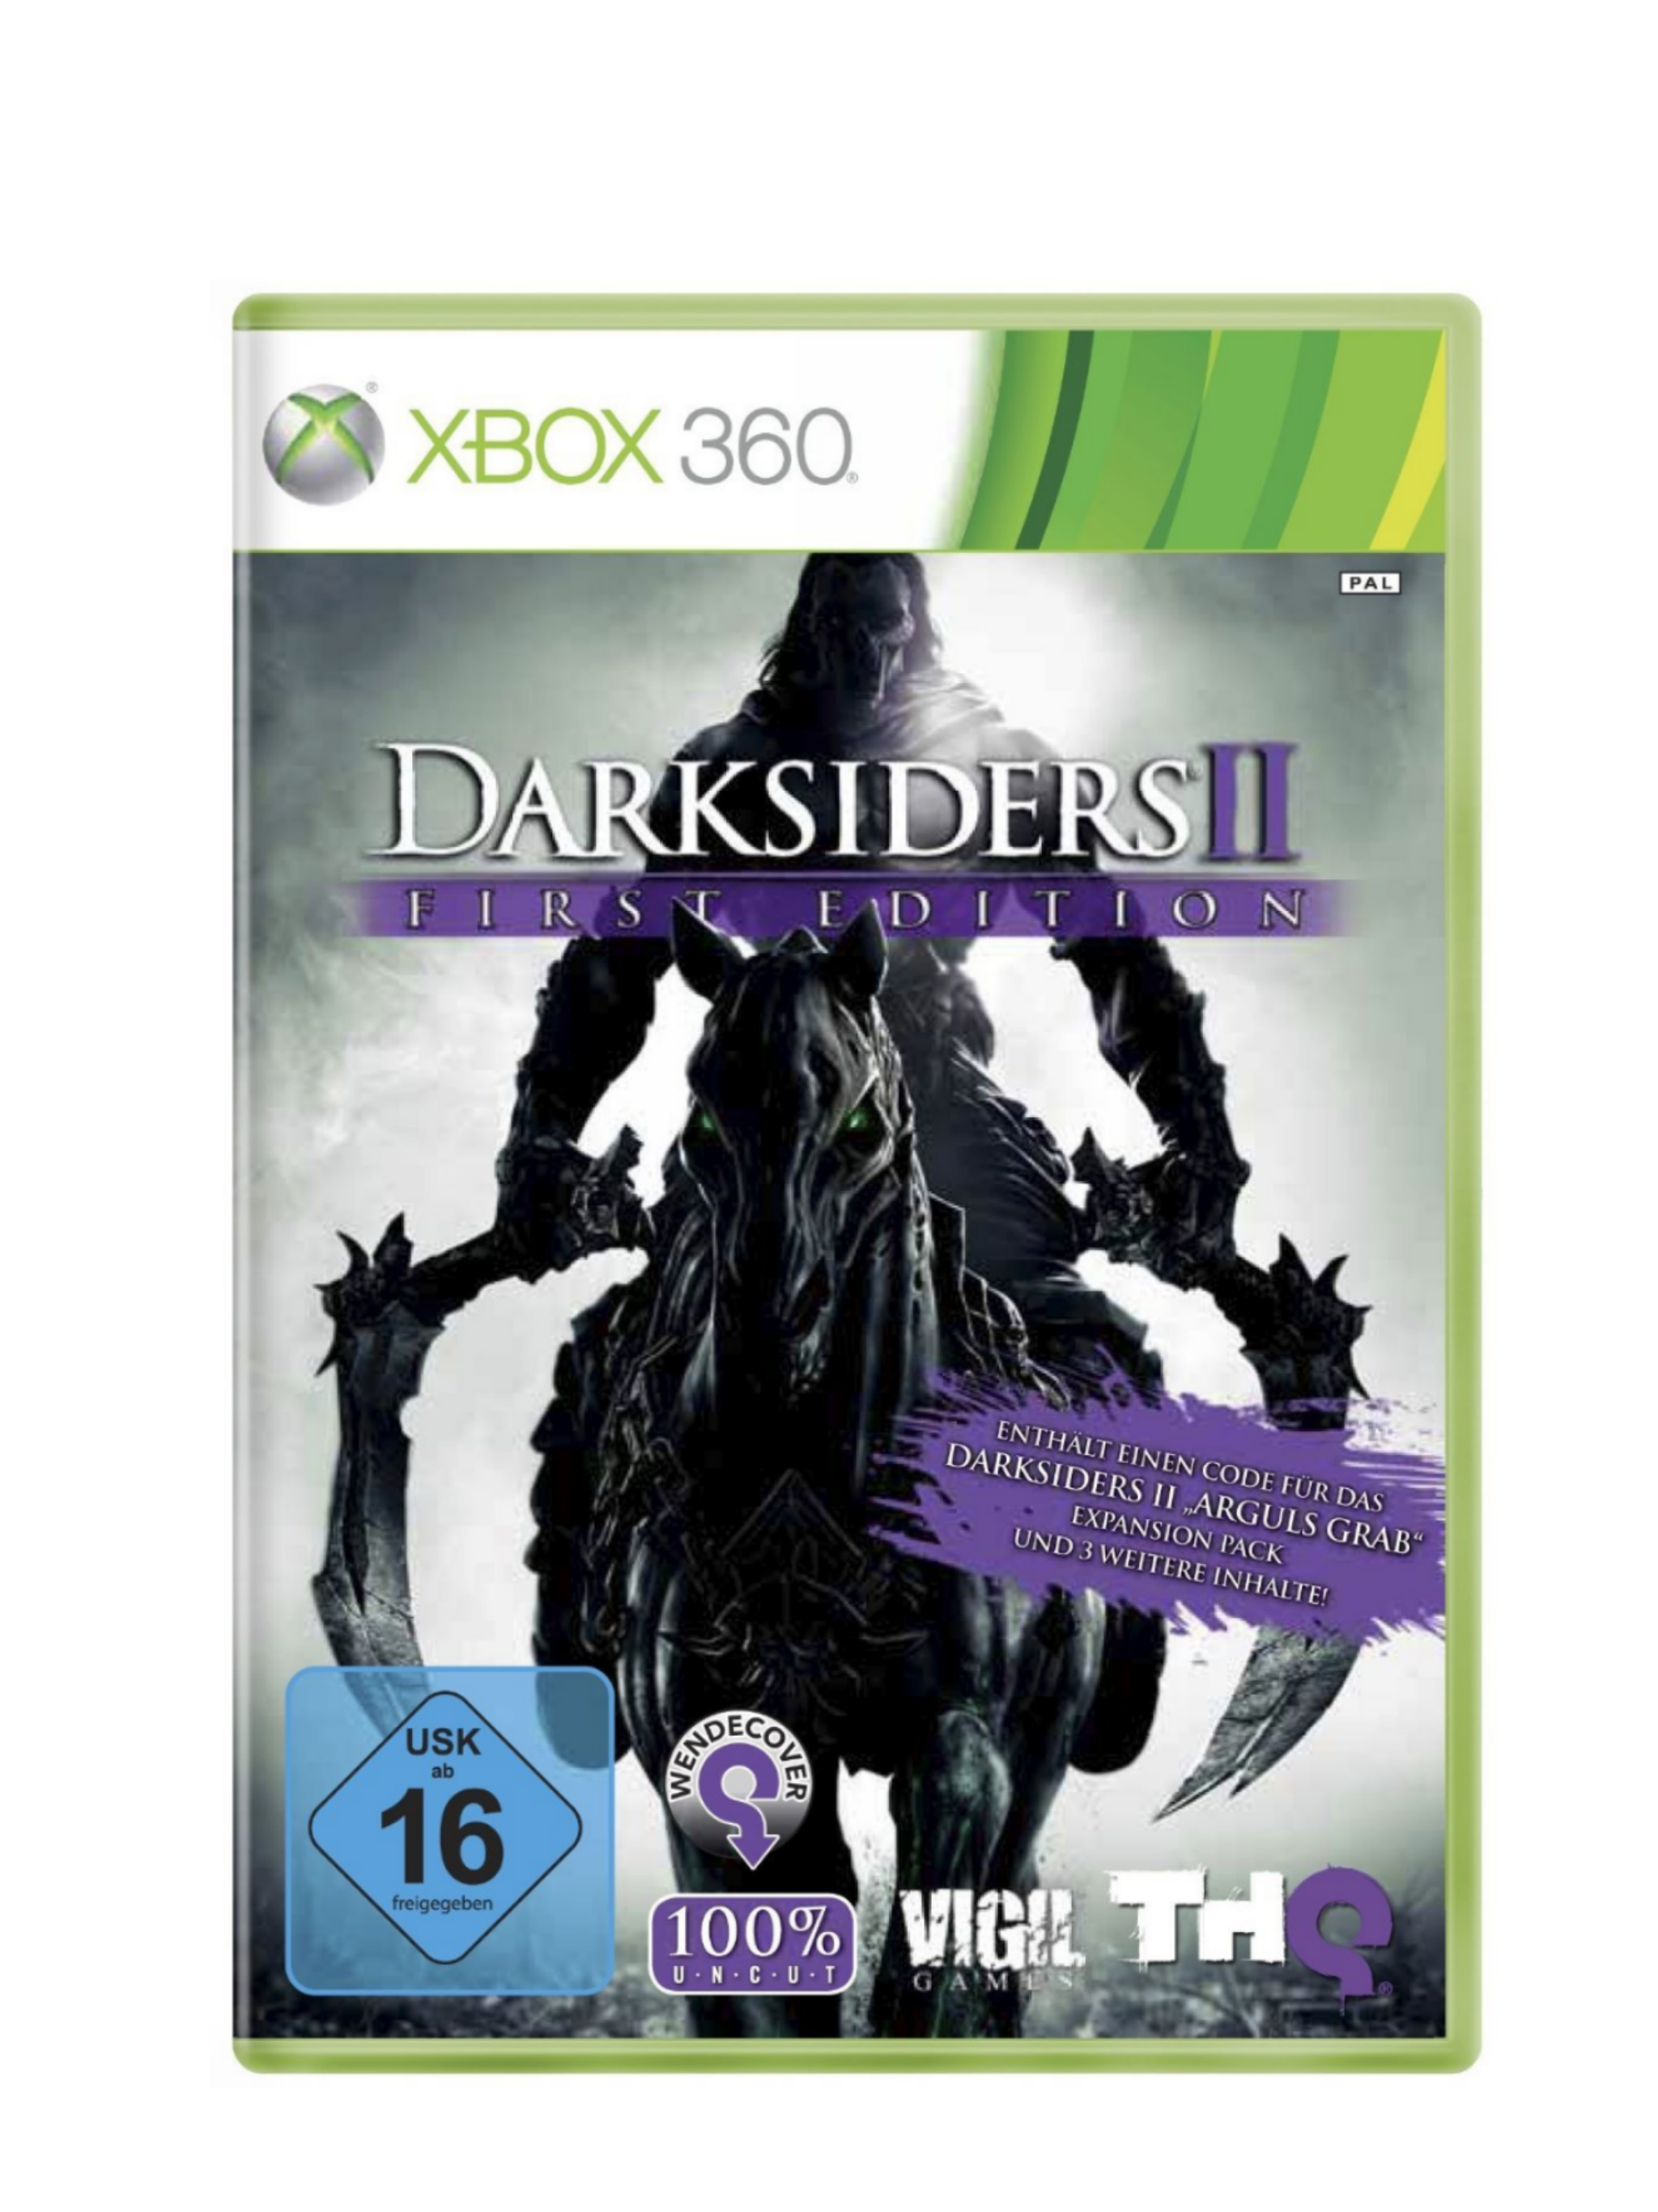 Darksiders II - First Edition) - [Xbox 360]